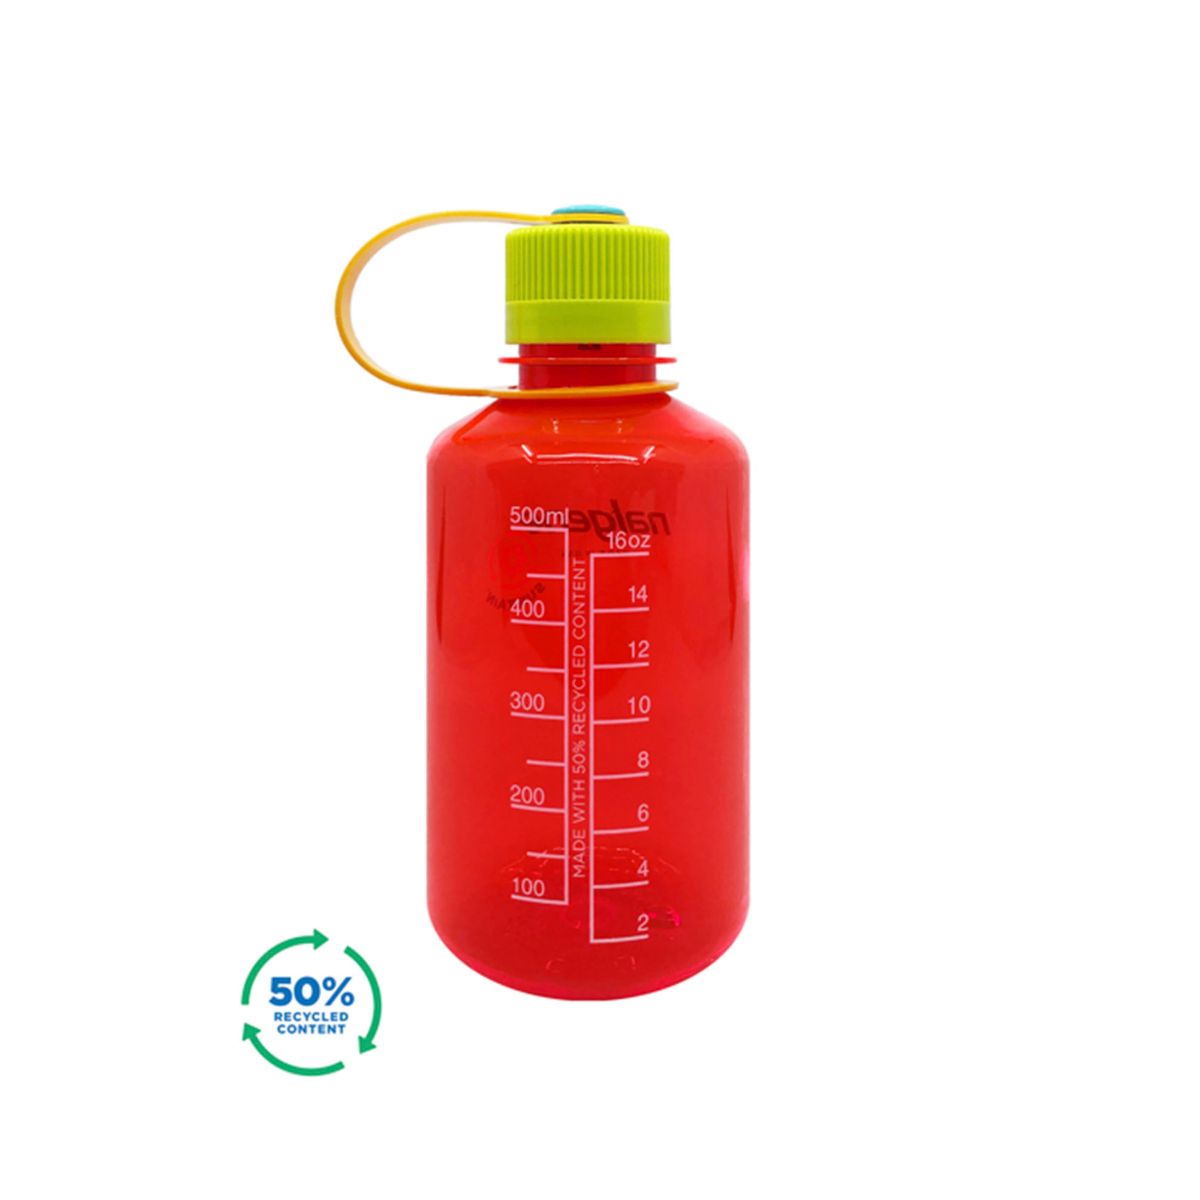 drikkeflaske i 50% resirkulert materiale. BPA-fr